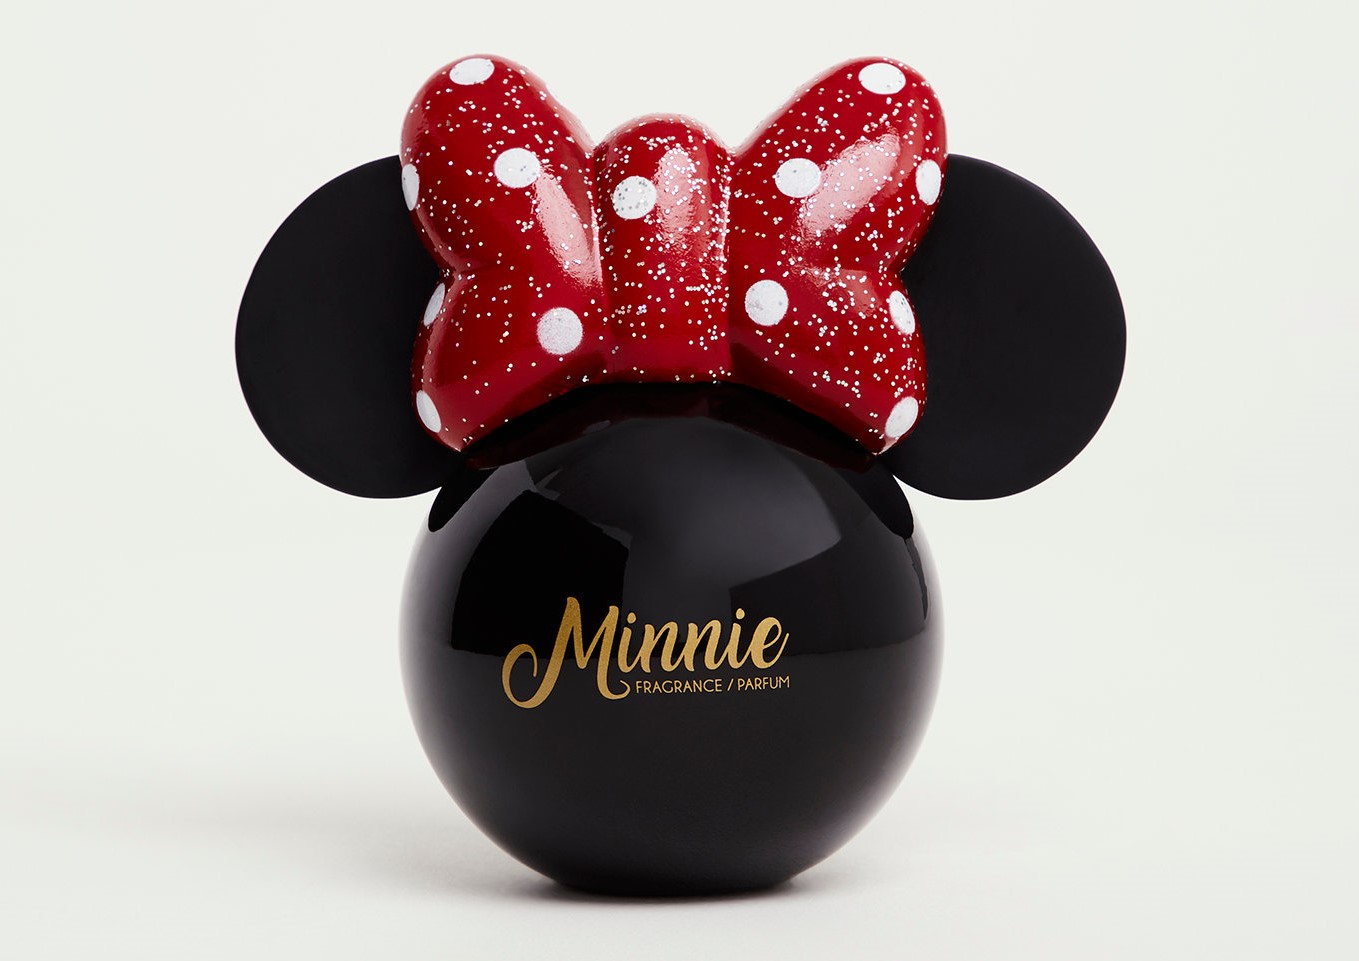 Minnie Mouse perfume